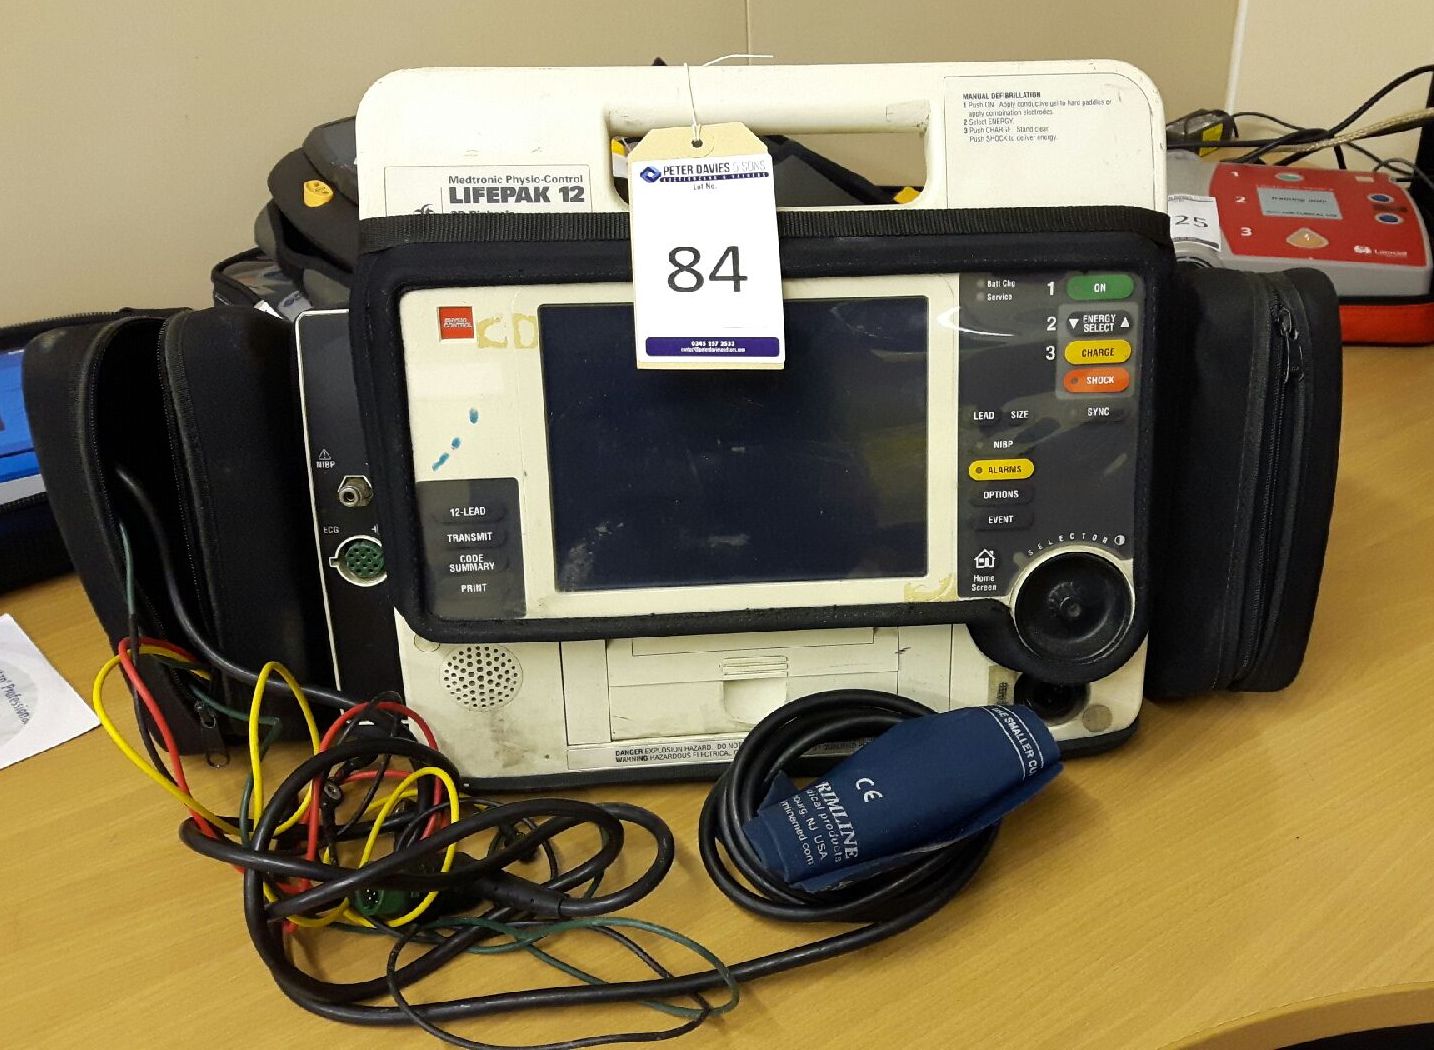 Medtronic Lifepak 12 Defibrillator, Serial Number: 13330749, Asset Number: 100500434 (No Batterie